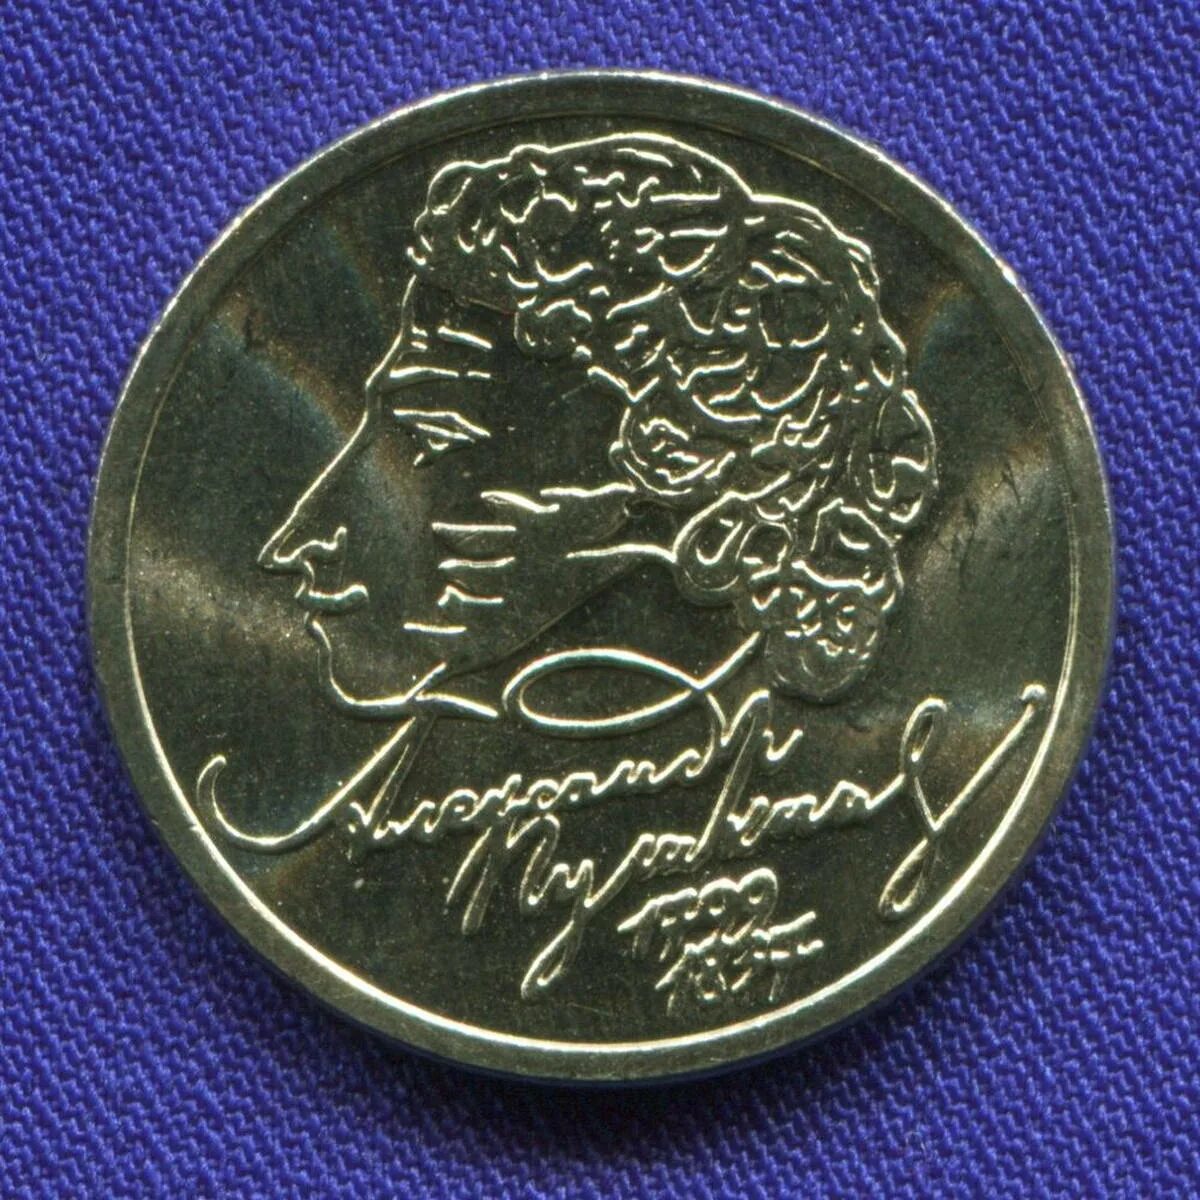 1 Рубль Пушкин 1999. Монета 1 рубль Пушкин 1999. Монета с Пушкиным 1999.